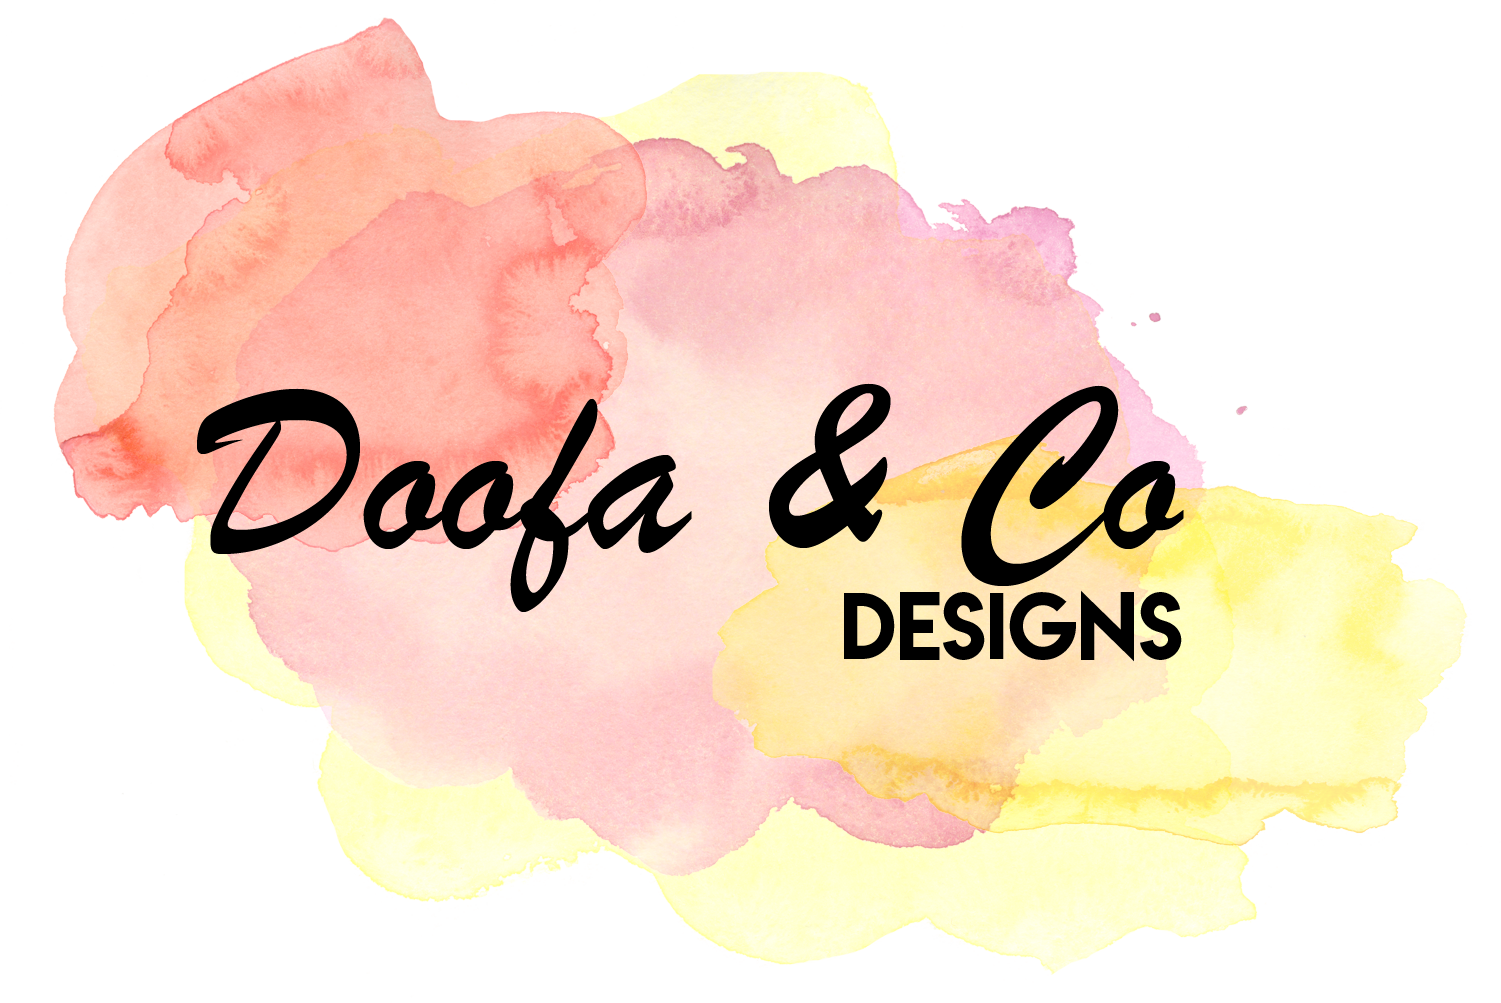 Doofa and Co Designs